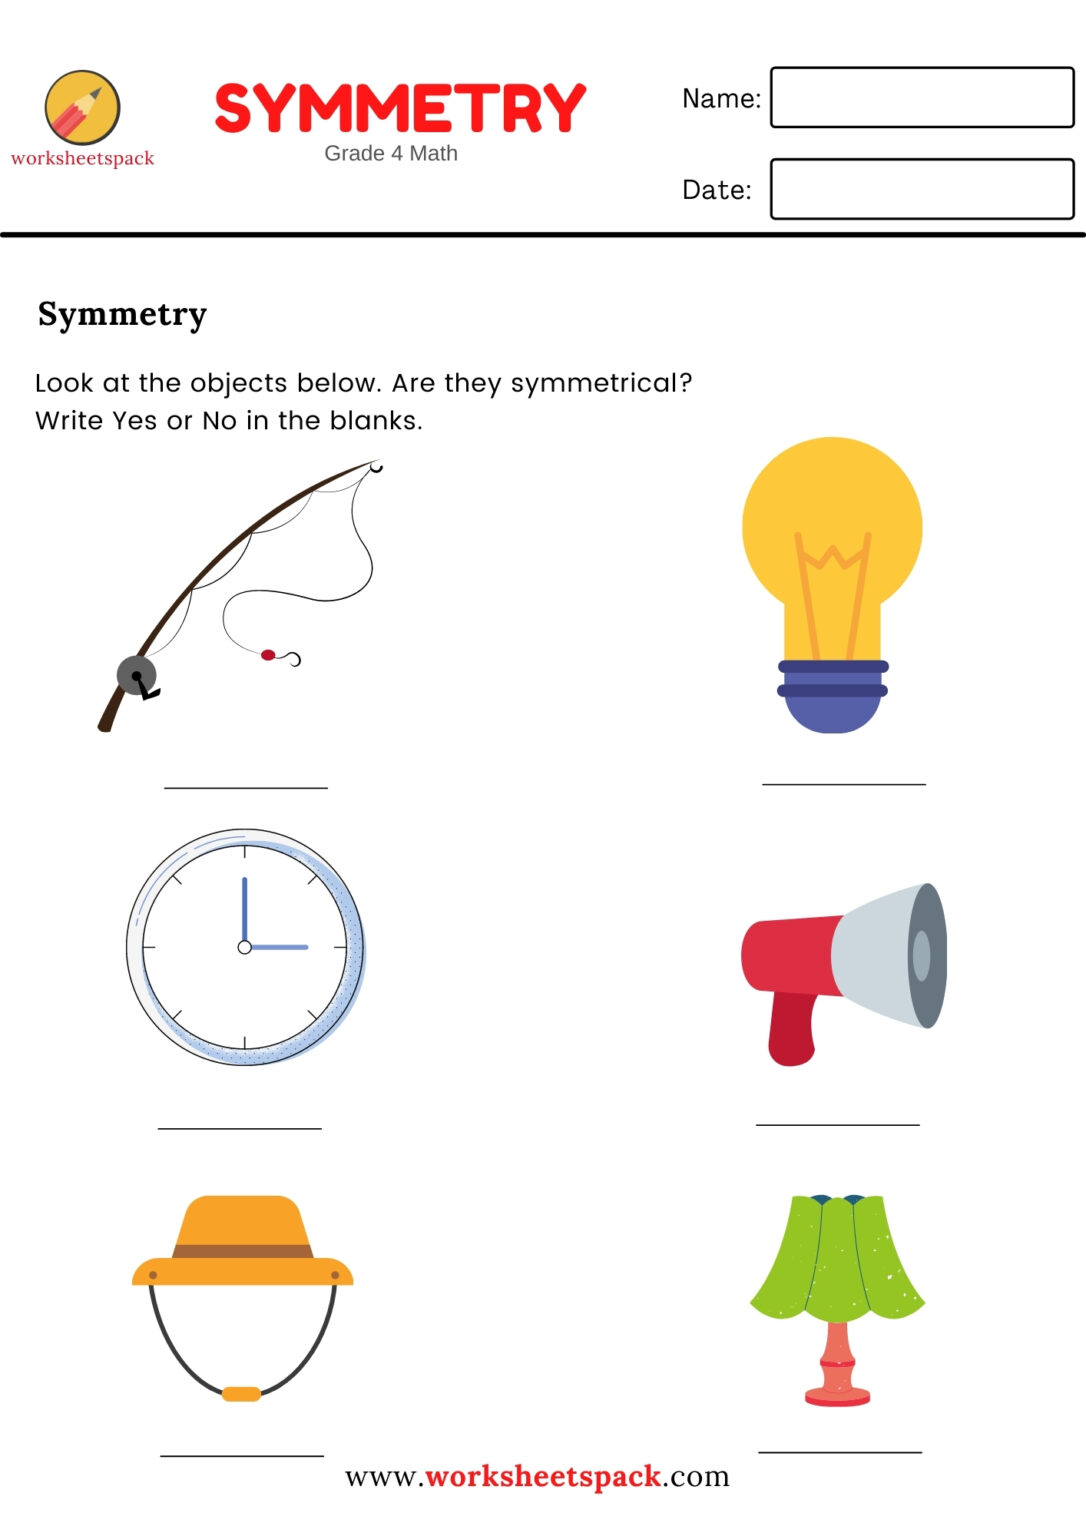 symmetry-worksheets-grade-4-symmetrical-objects-worksheetspack